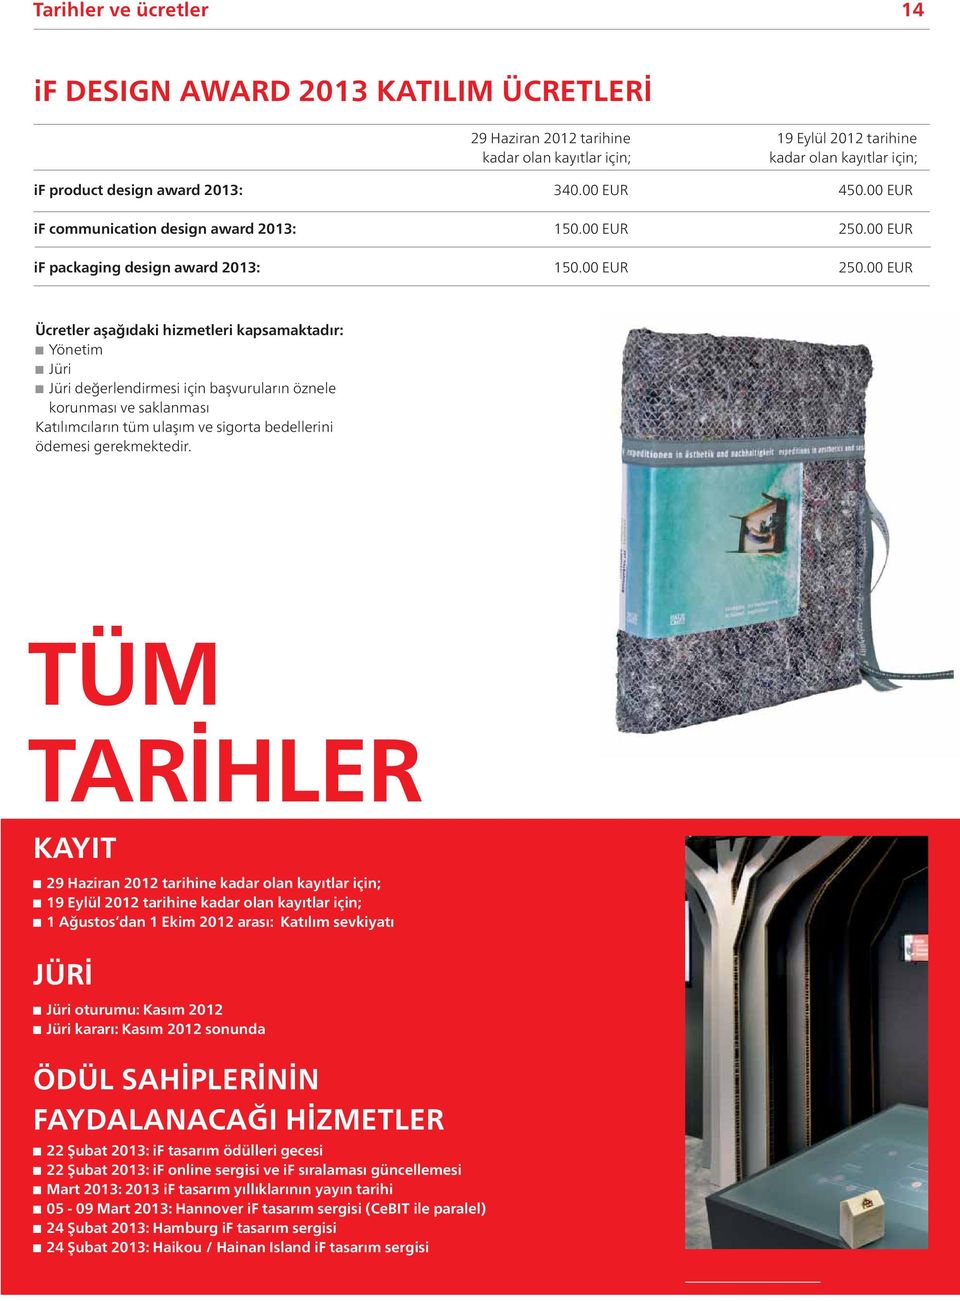 00 EUR if packaging design award 2013: 150.00 EUR 250.